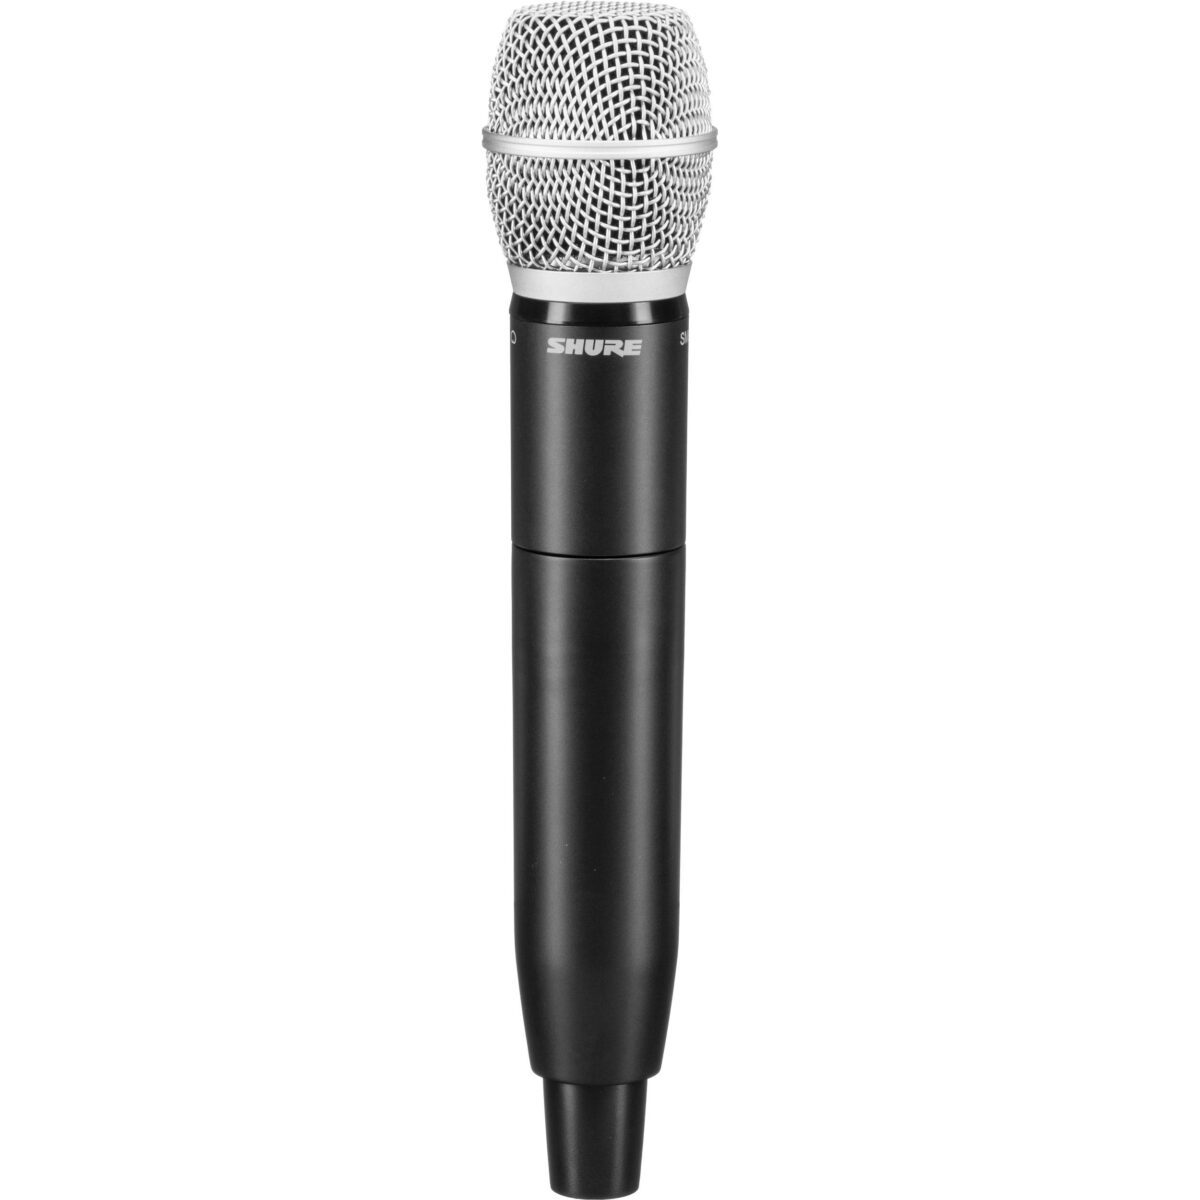 Shure GLXD24/B87A Digital Wireless Handheld Microphone System